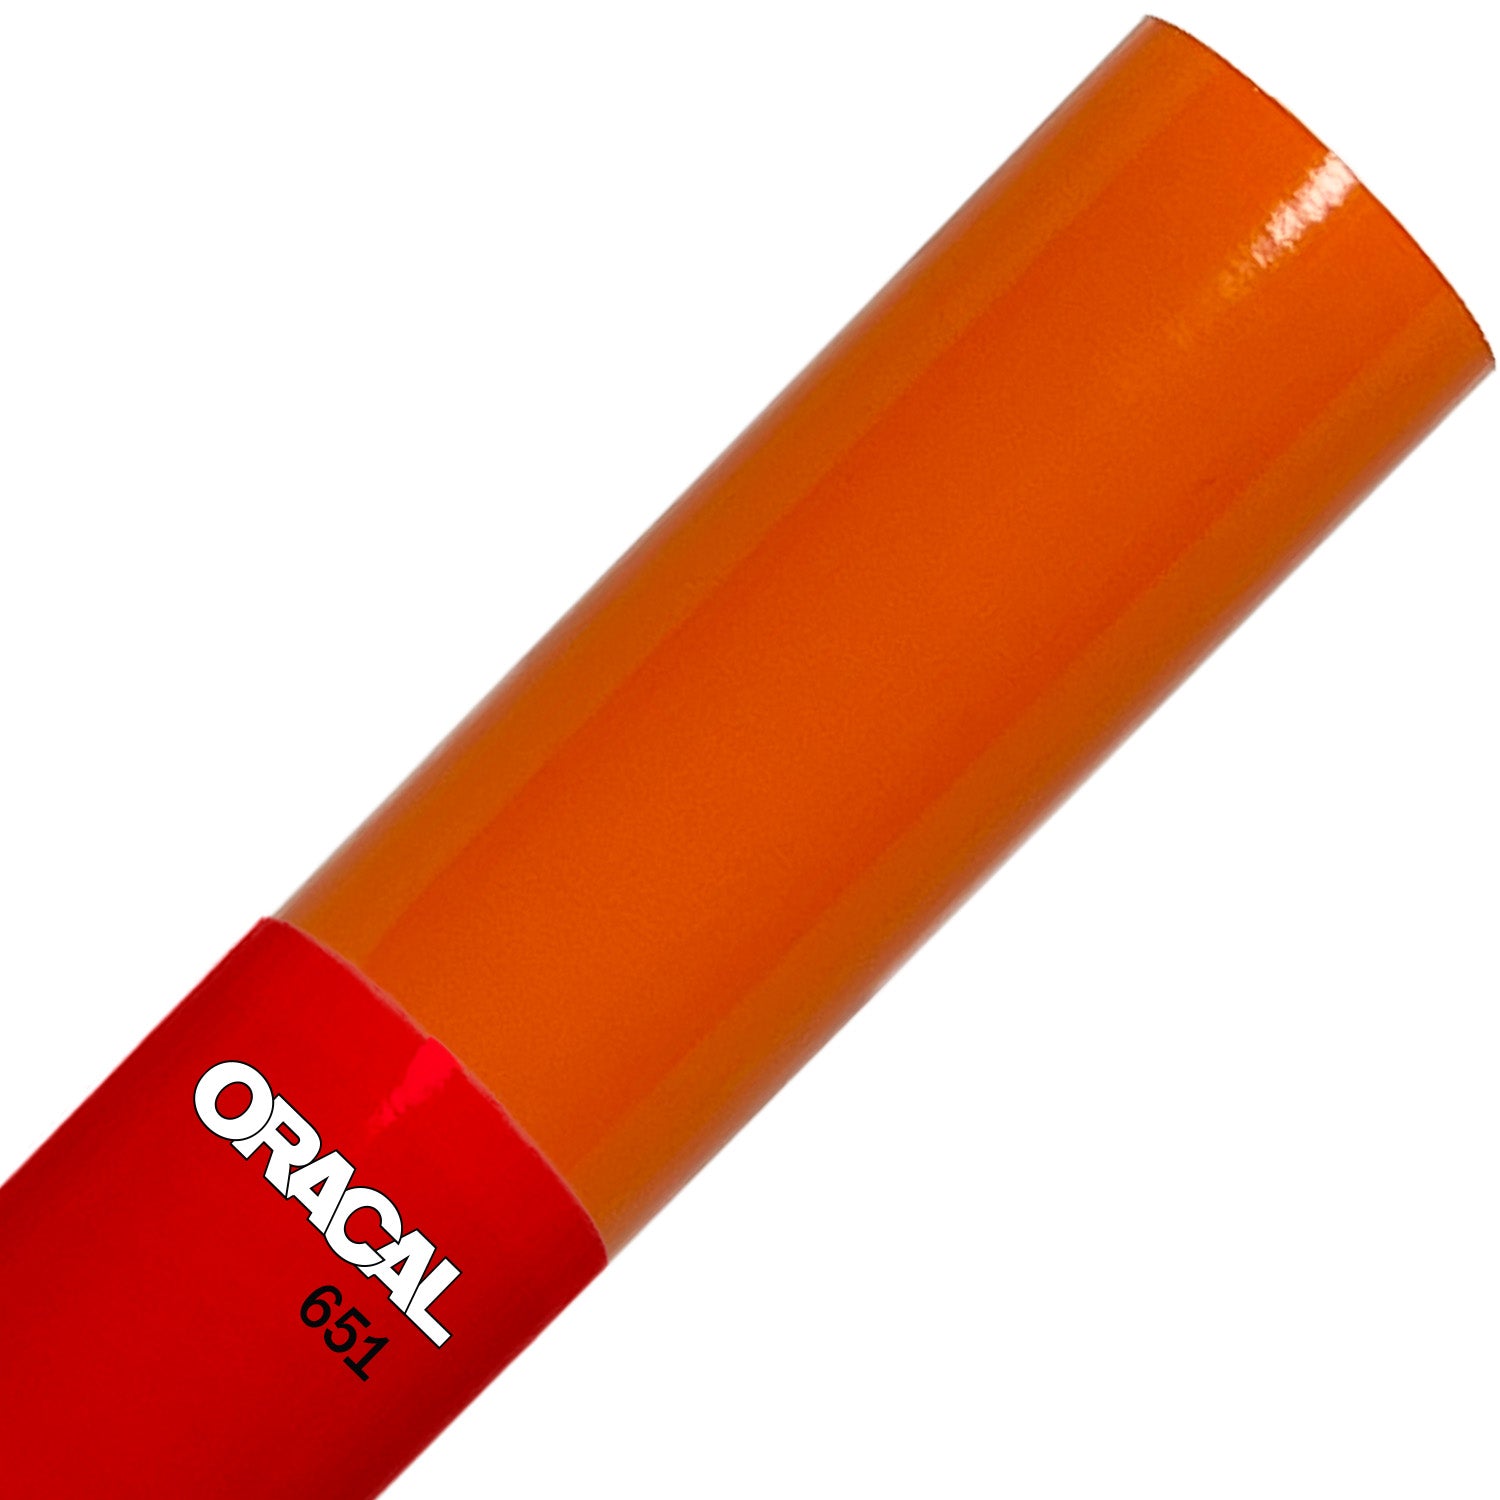 Oracal 651 Glossy Vinyl Rolls - Light Orange, 12 inch x 6 Foot